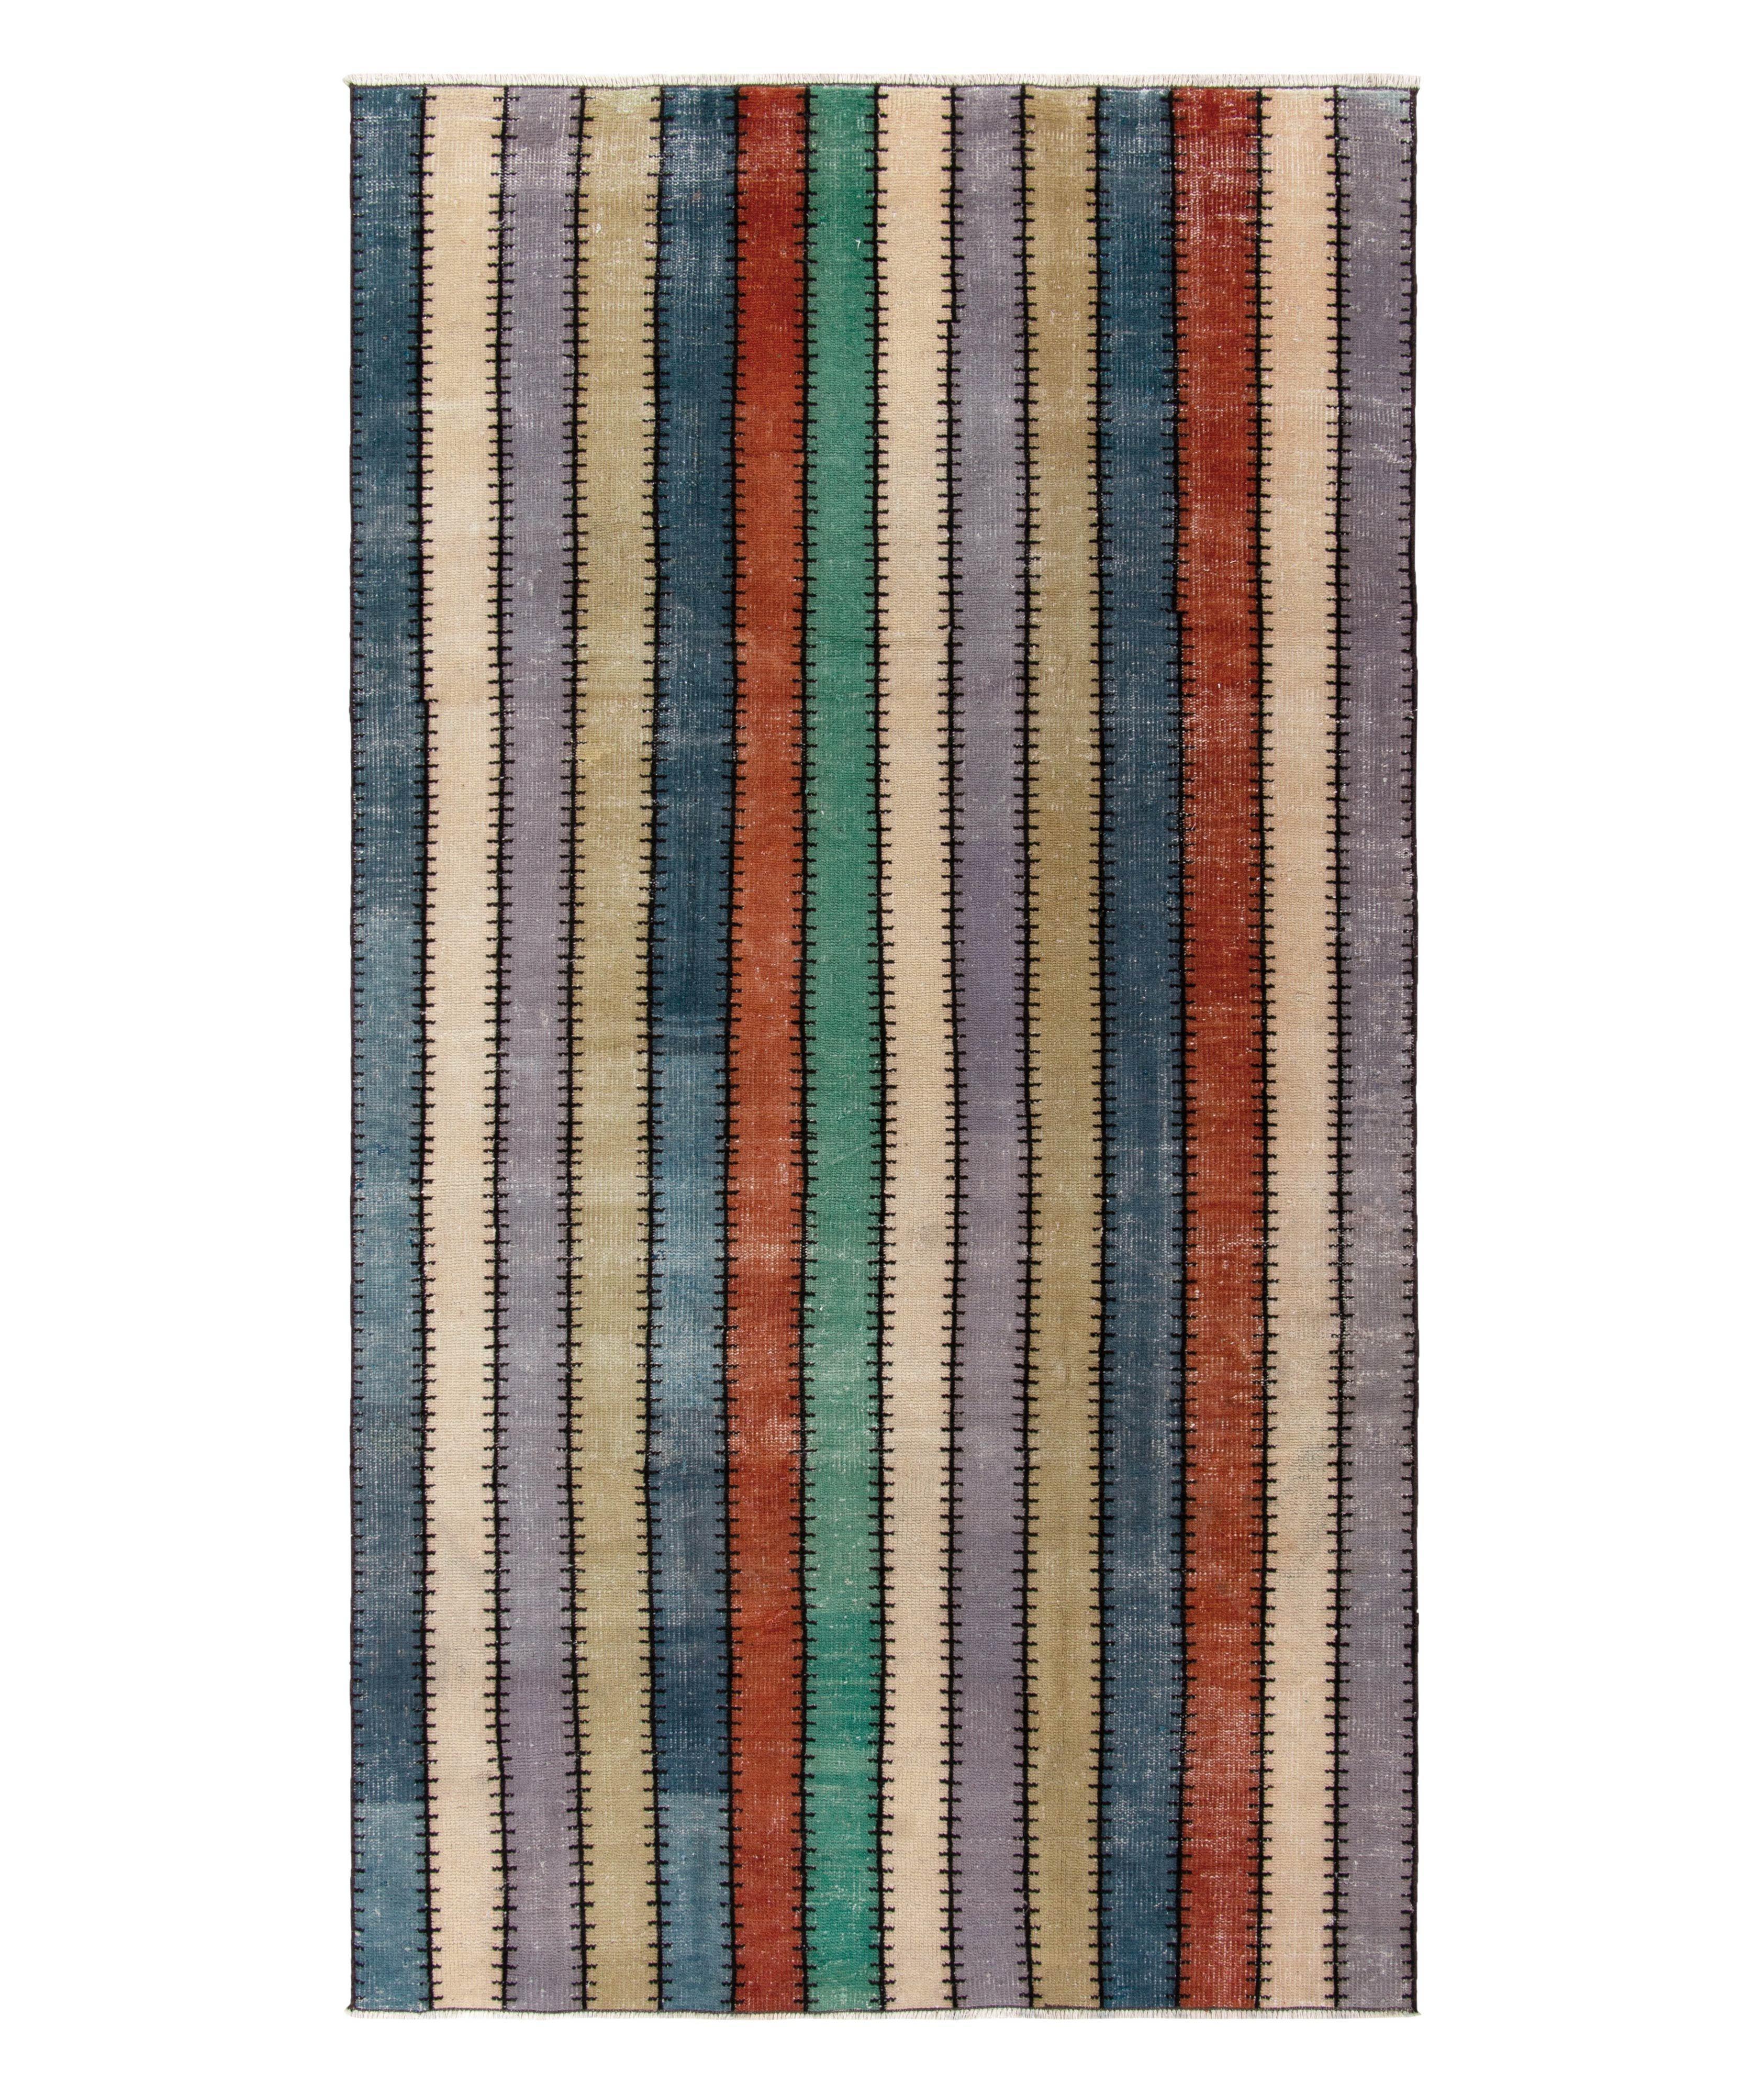 1960s Vintage Distressed Striped Pattern Rug image 0